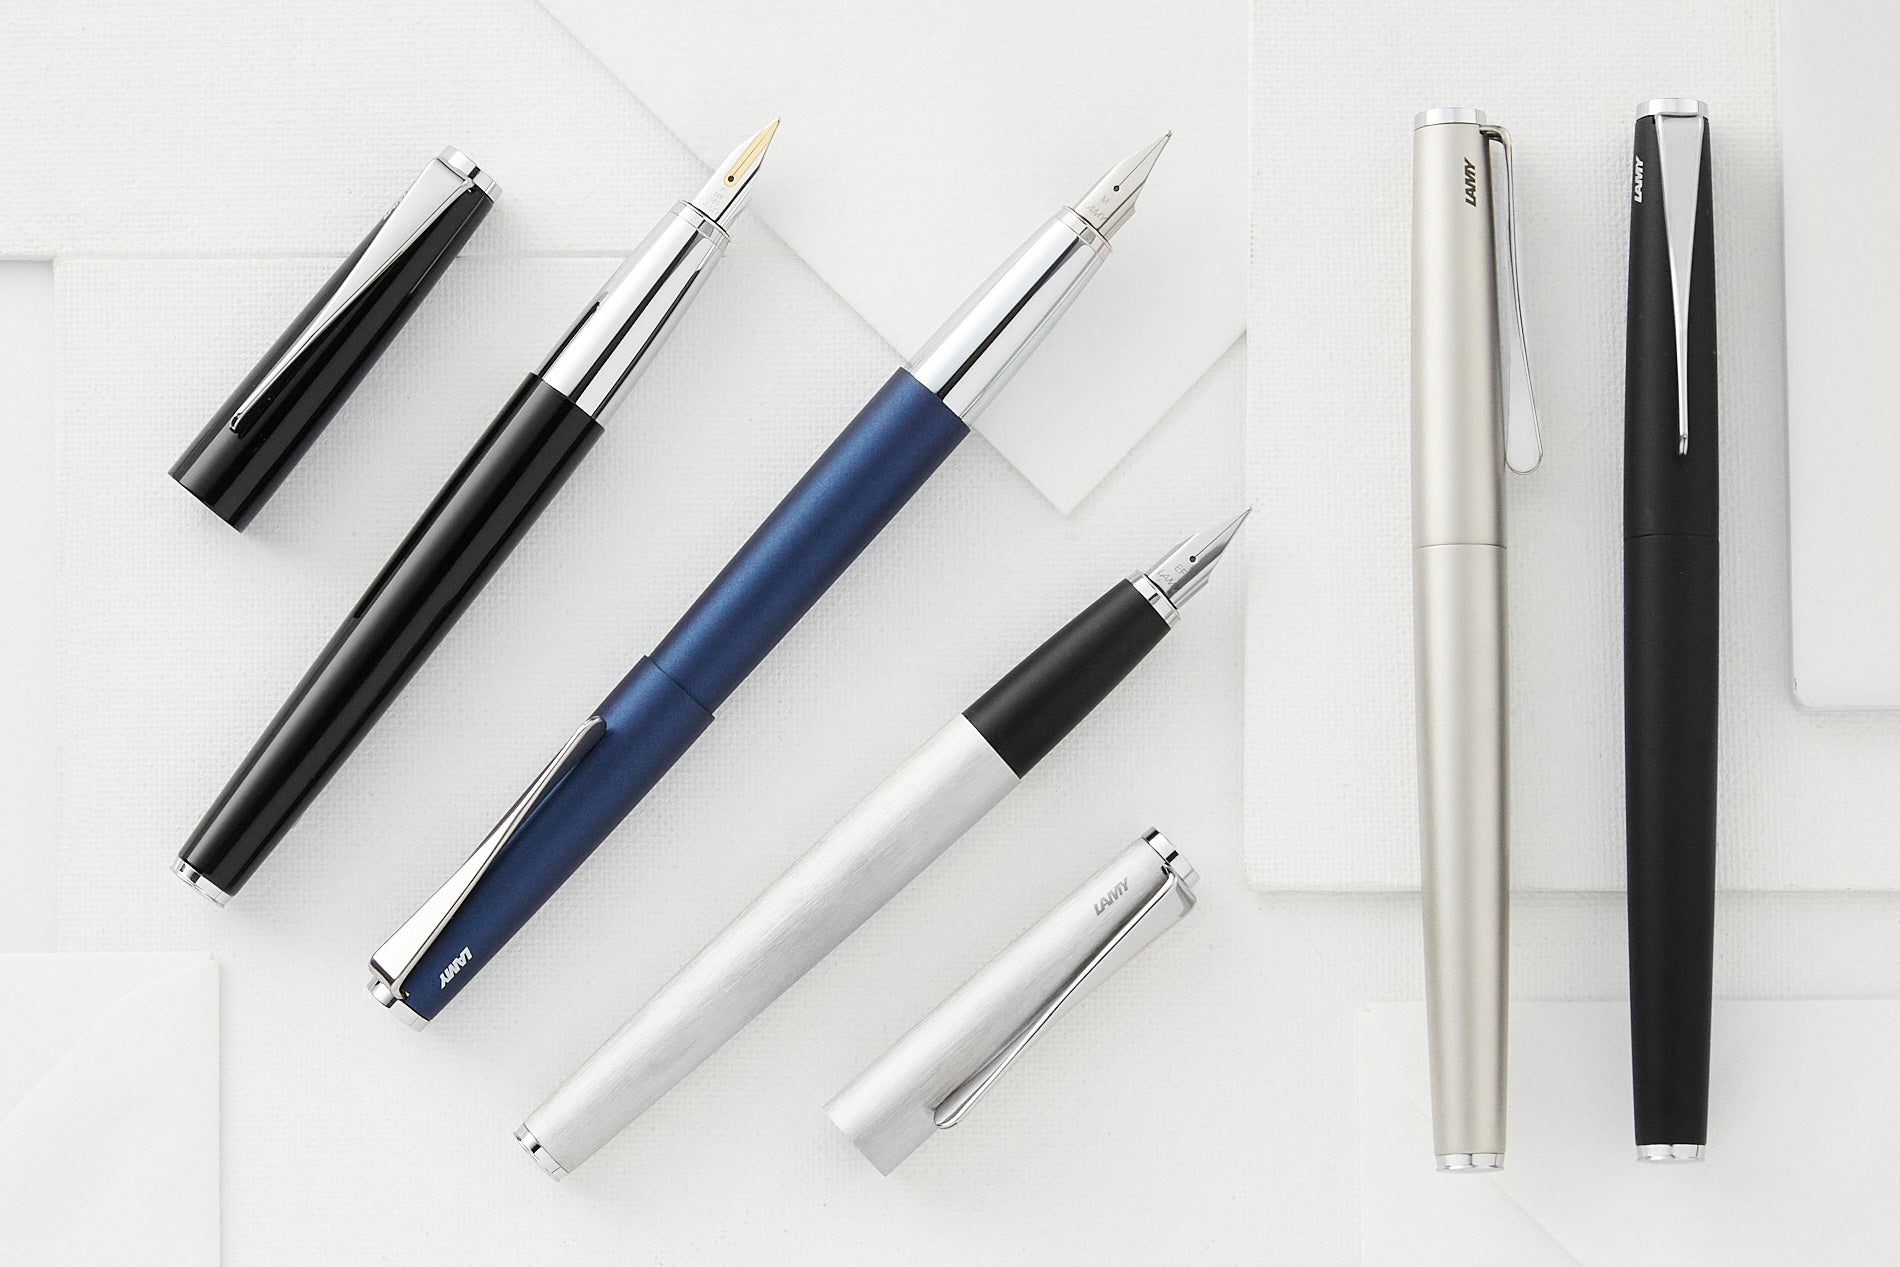 Five LAMY studio fountain pens on a light background